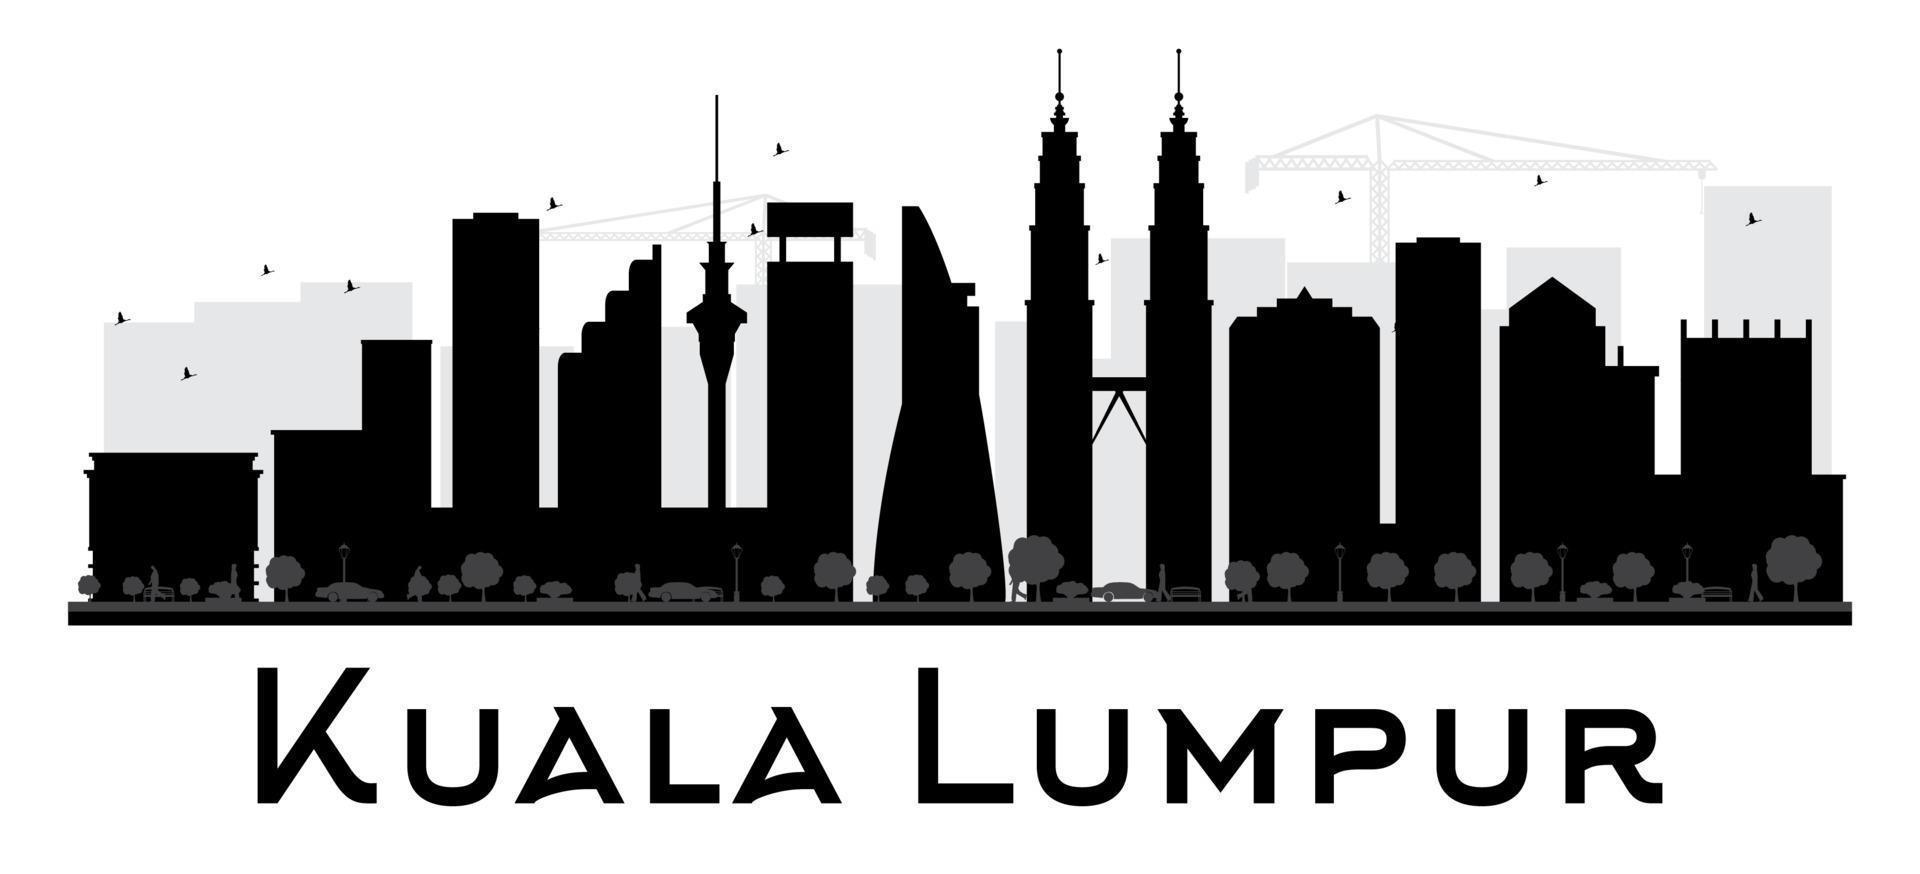 Kuala Lumpur City skyline black and white silhouette. vector